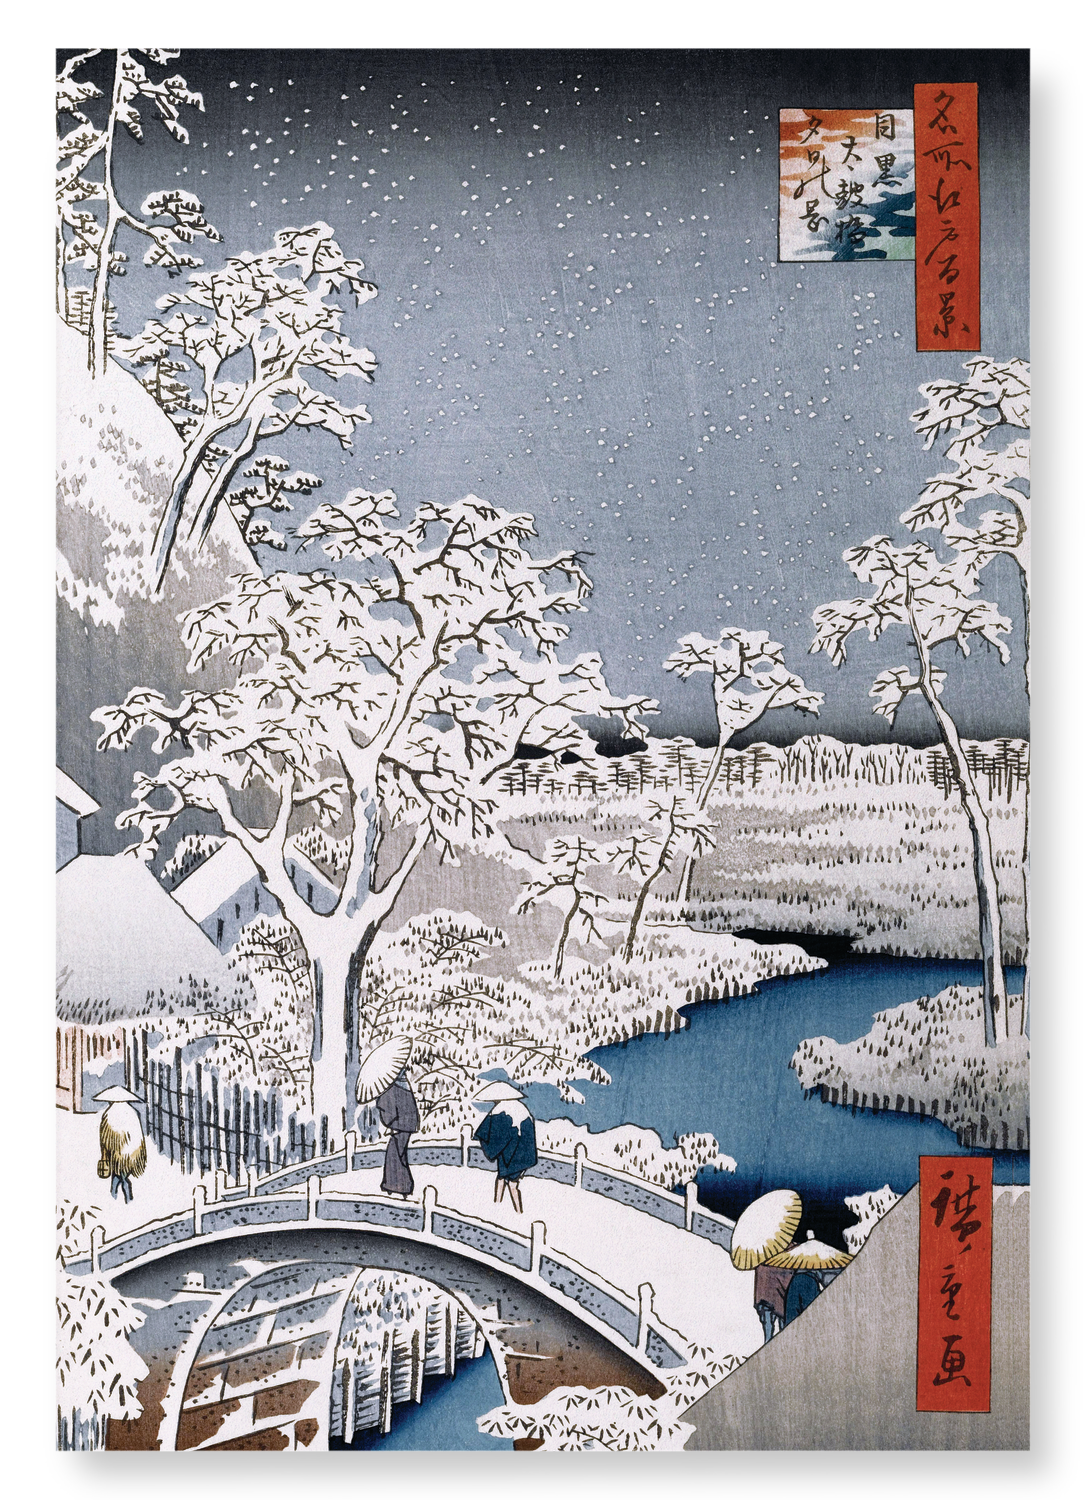 MEGURO DRUM BRIDGE AND SUNSET HILL (1857): Japanese Art Print